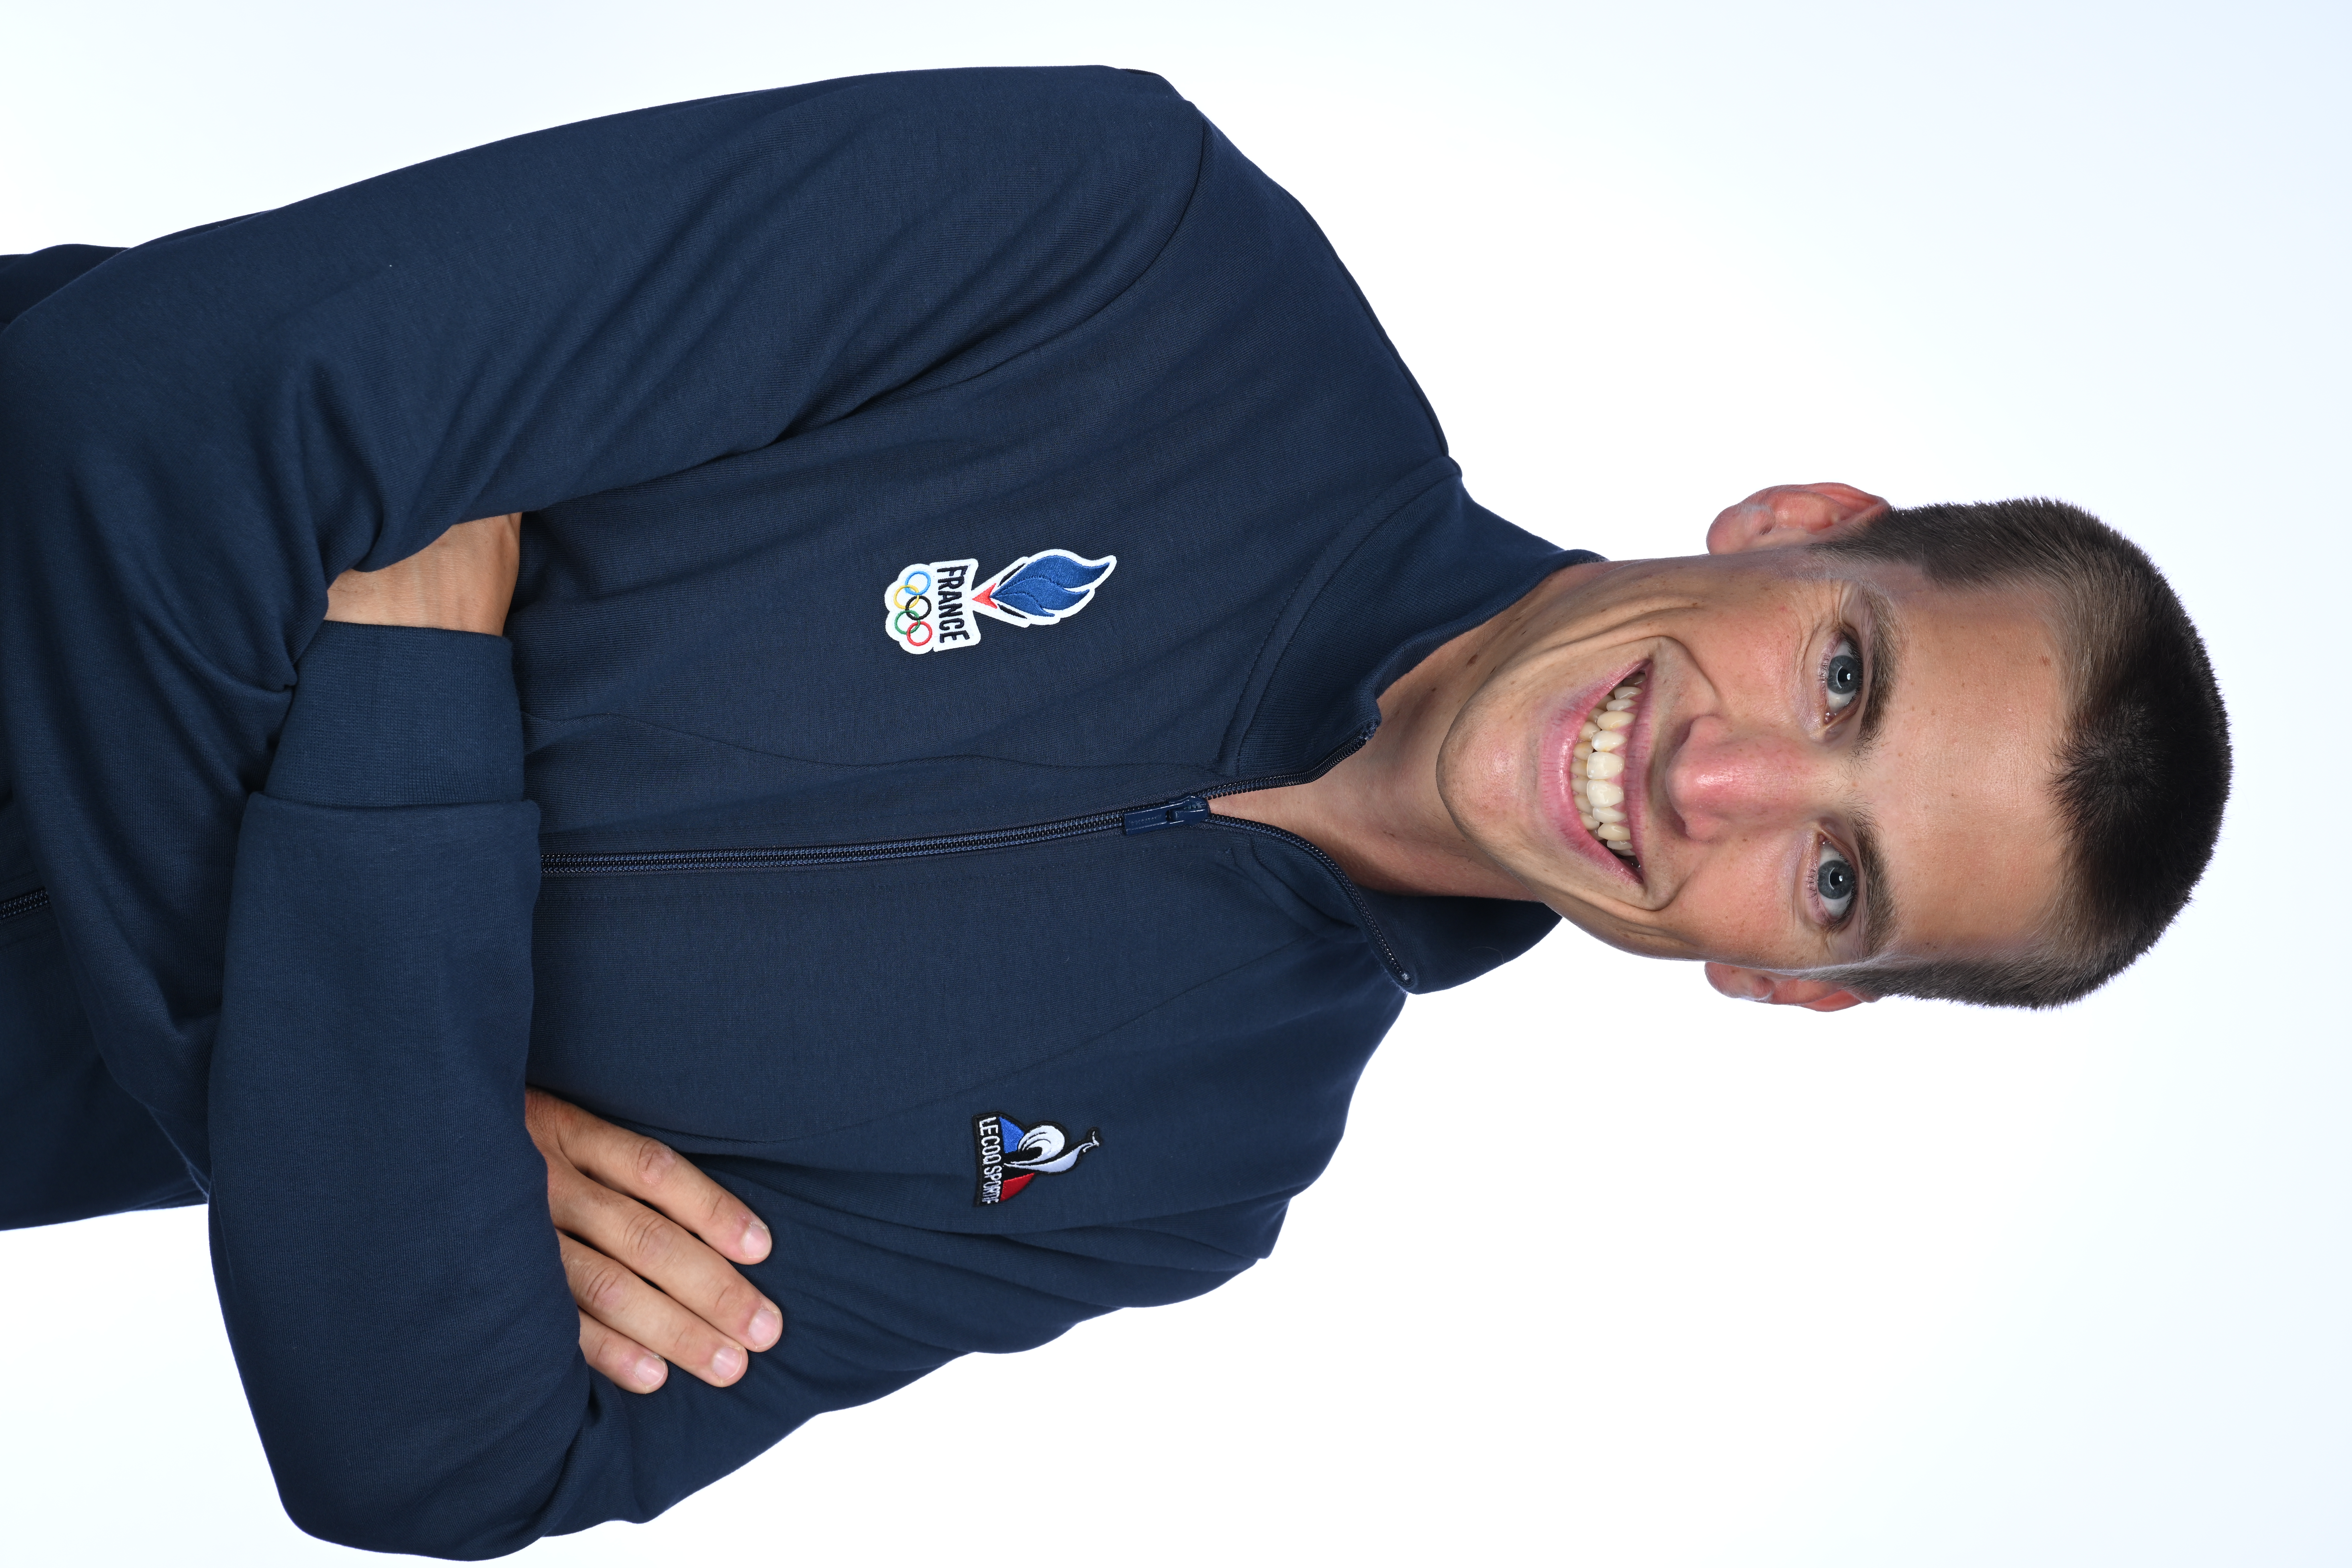 LUDWIG Ferdinand Equipe de France olympique Aviron